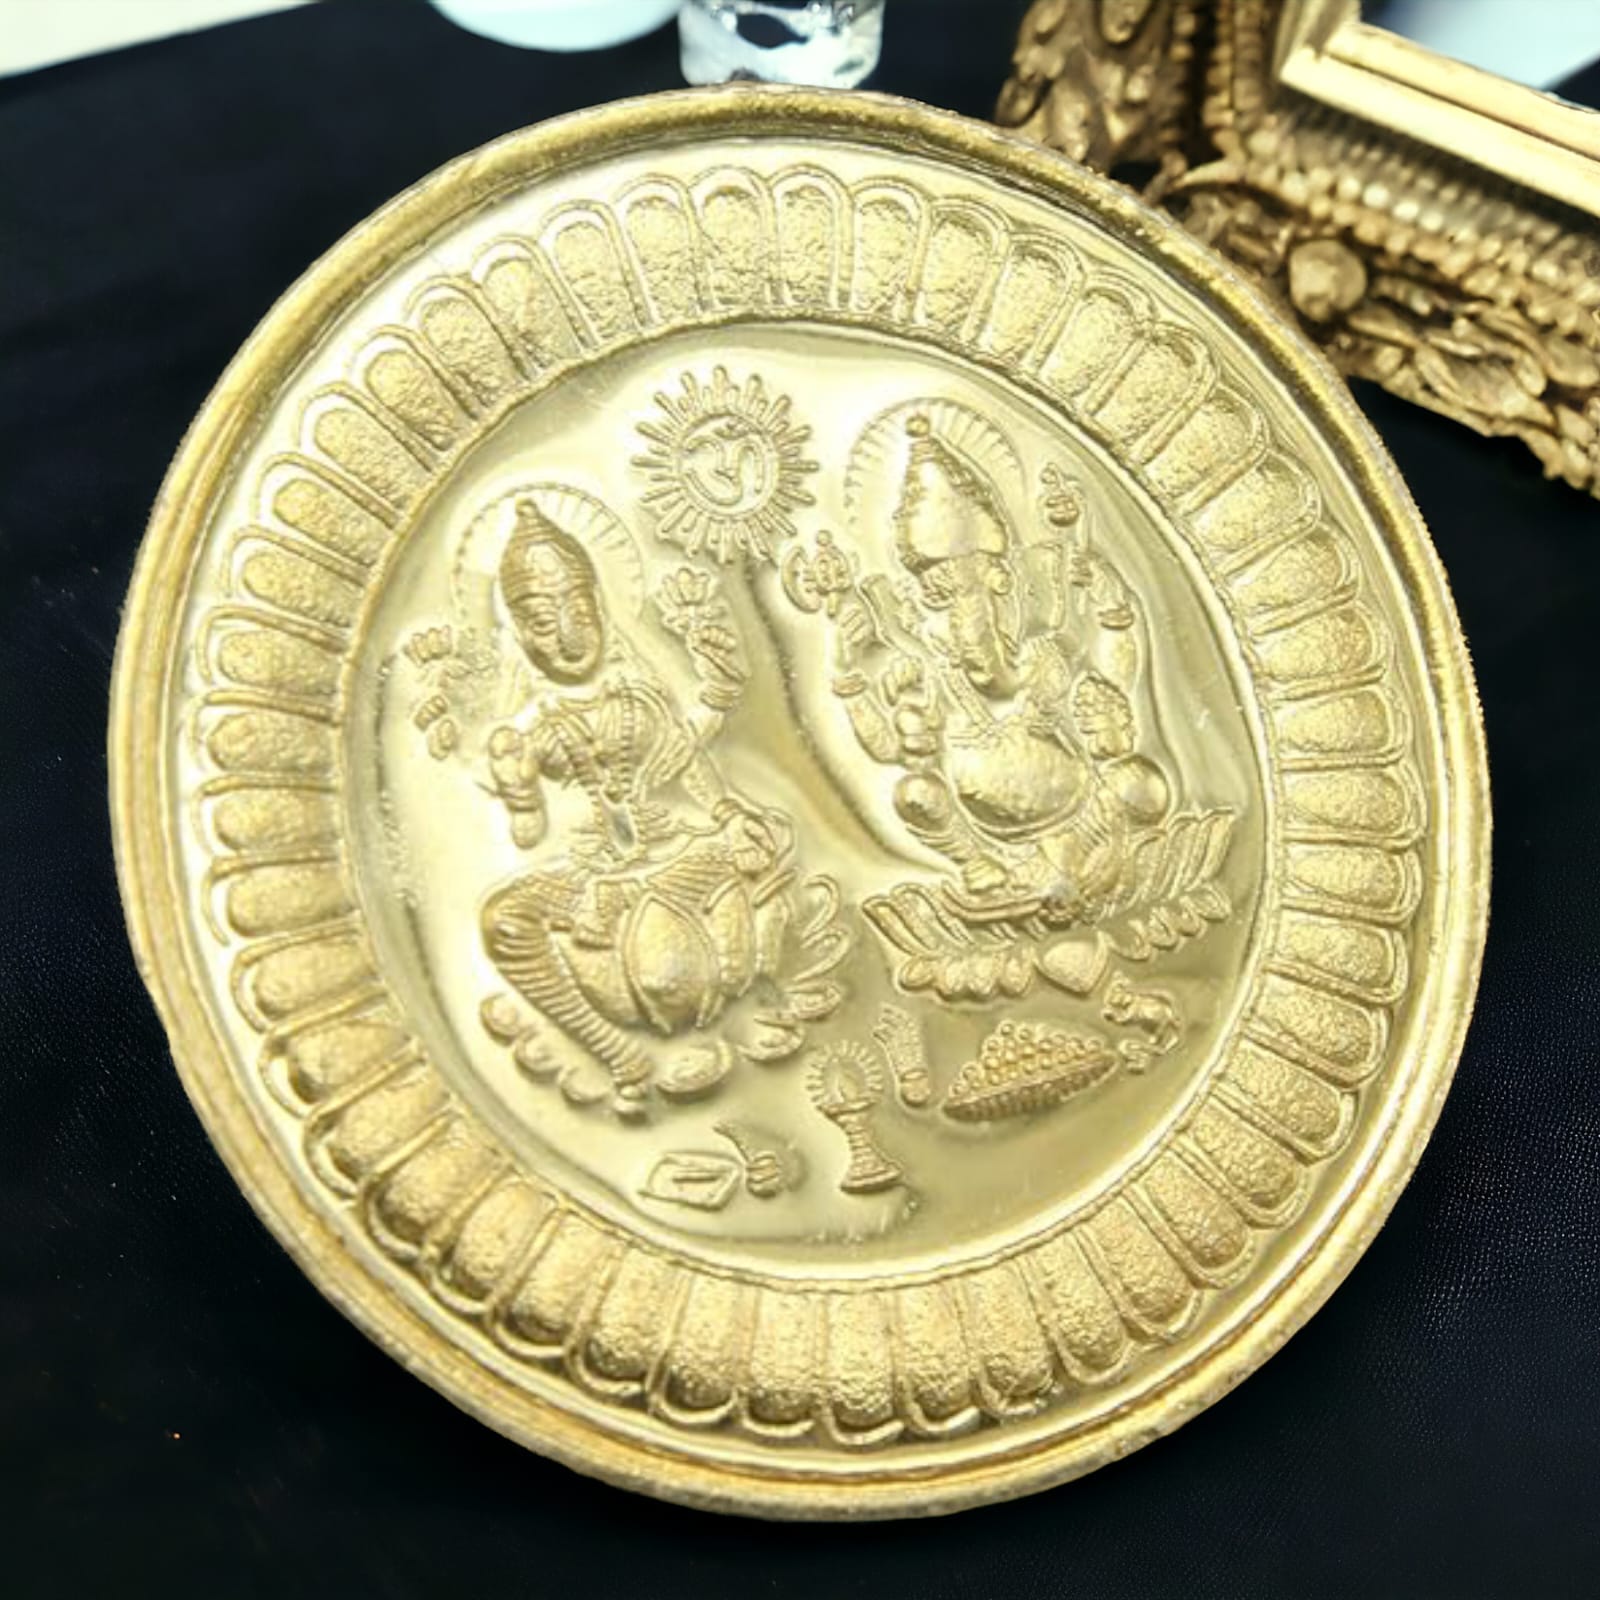 999 Silver Laxmi Ganesha Gold Plated Coin For Diwali And Dhanteras